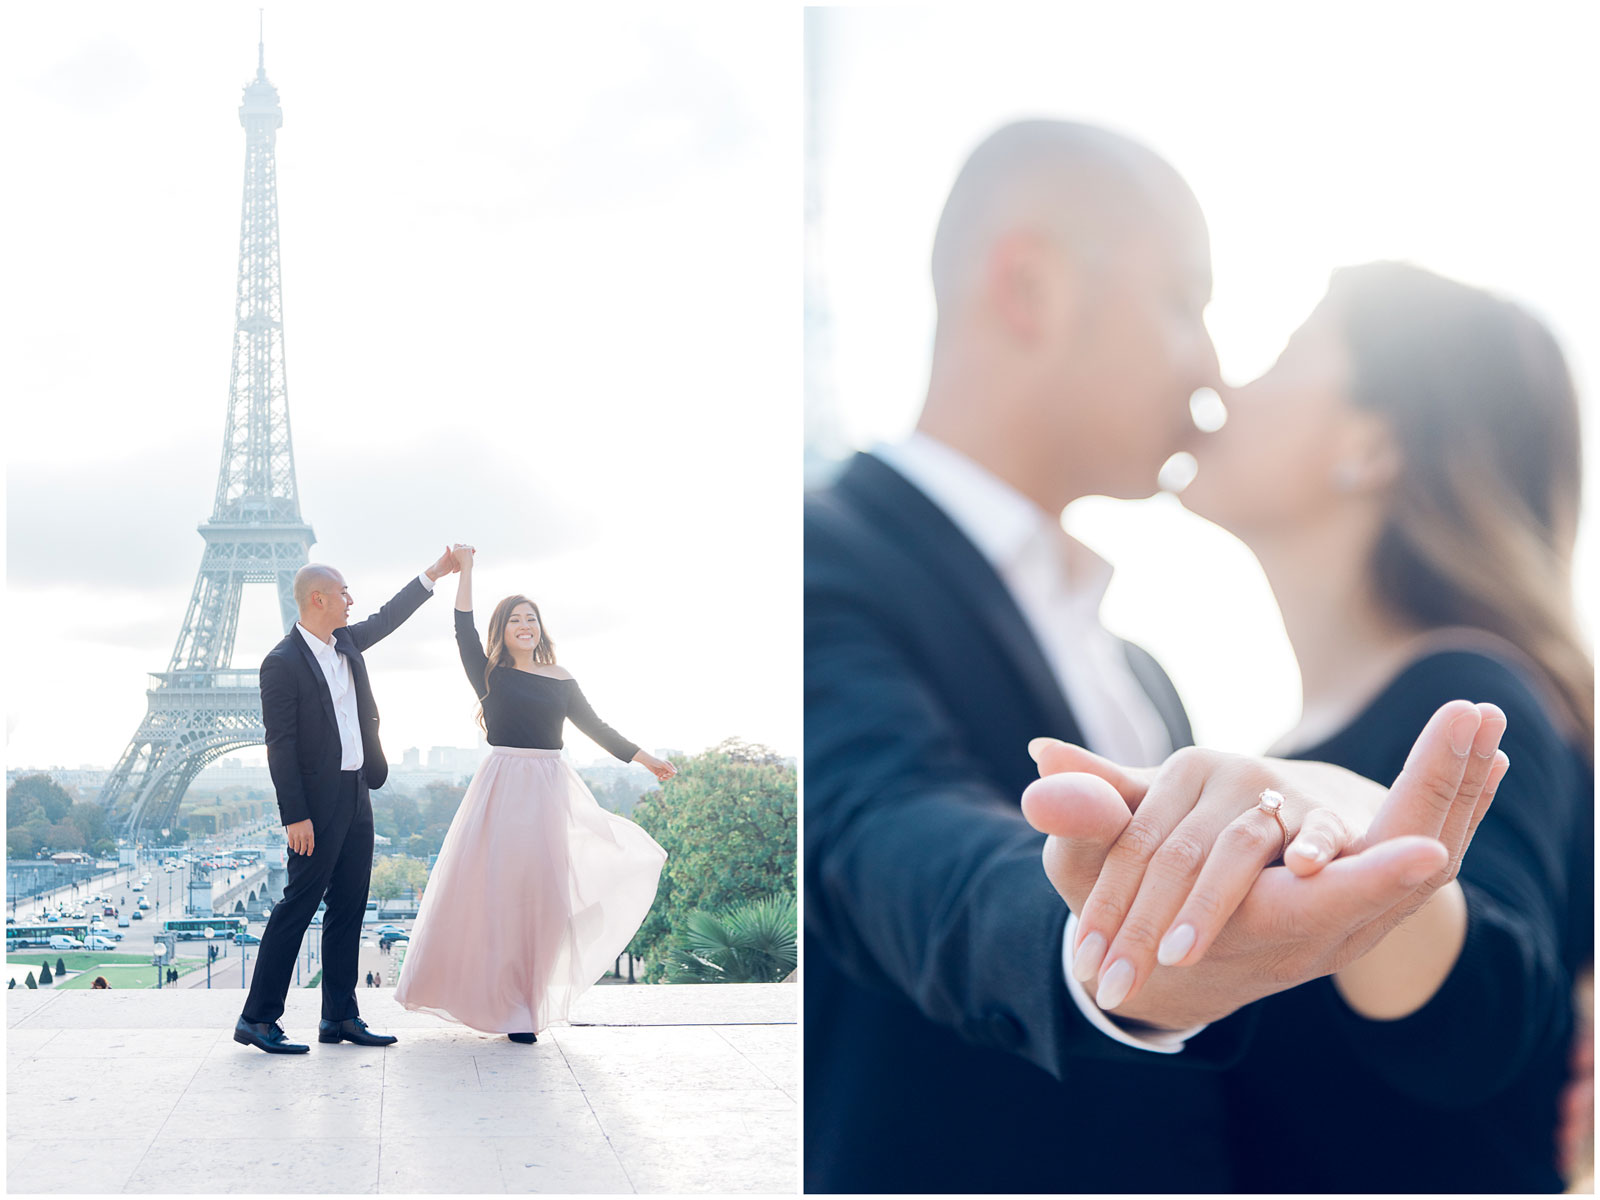 Paris engagement photographer - proposal photo shoot at the Eiffel Tower